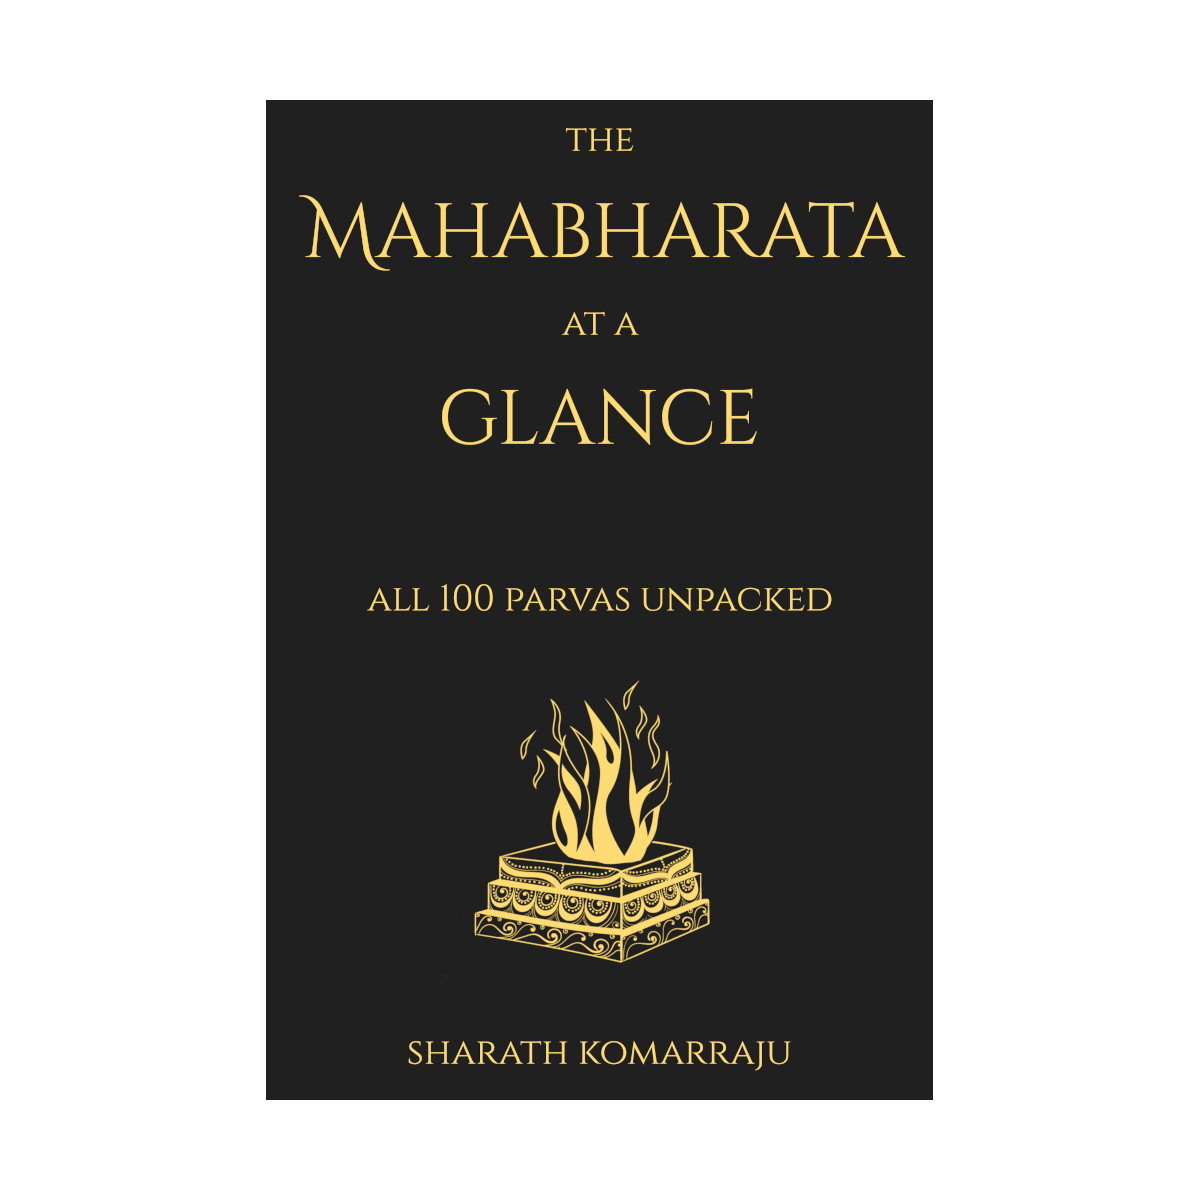 The Mahabharata at a Glance: All 100 Parvas Unpacked